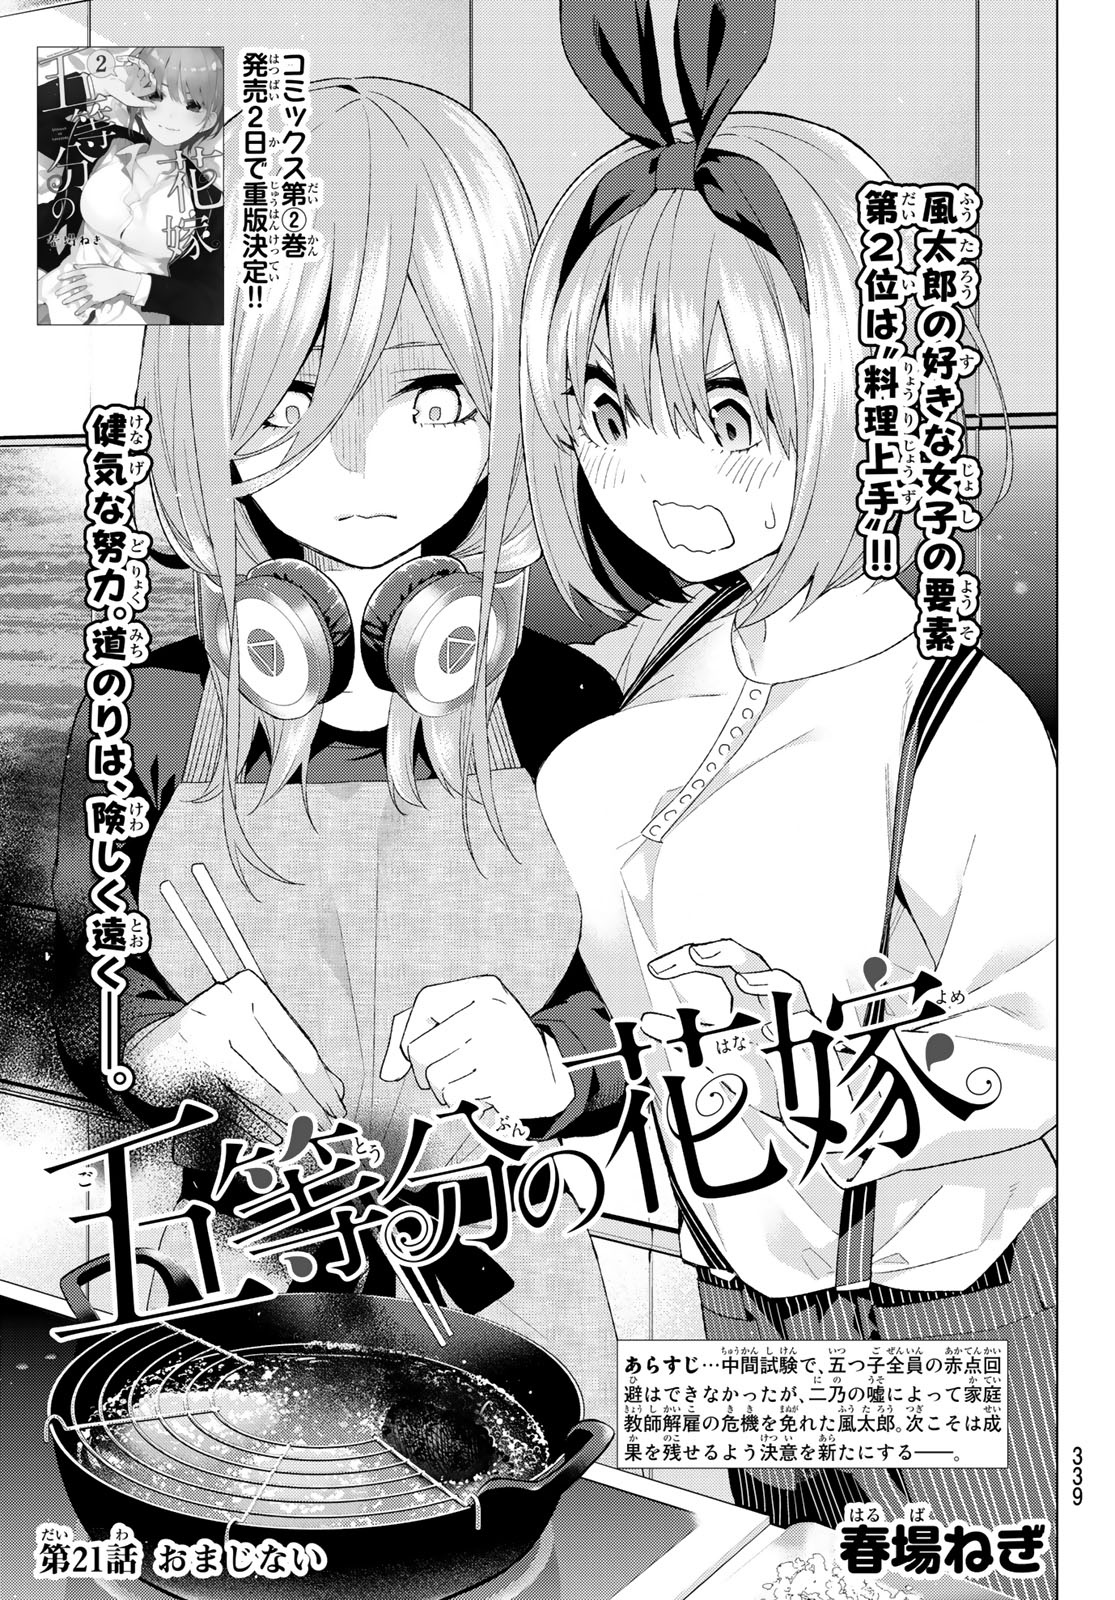 Art] Marrying Nino [5 Toubun no Hanayome] : r/manga